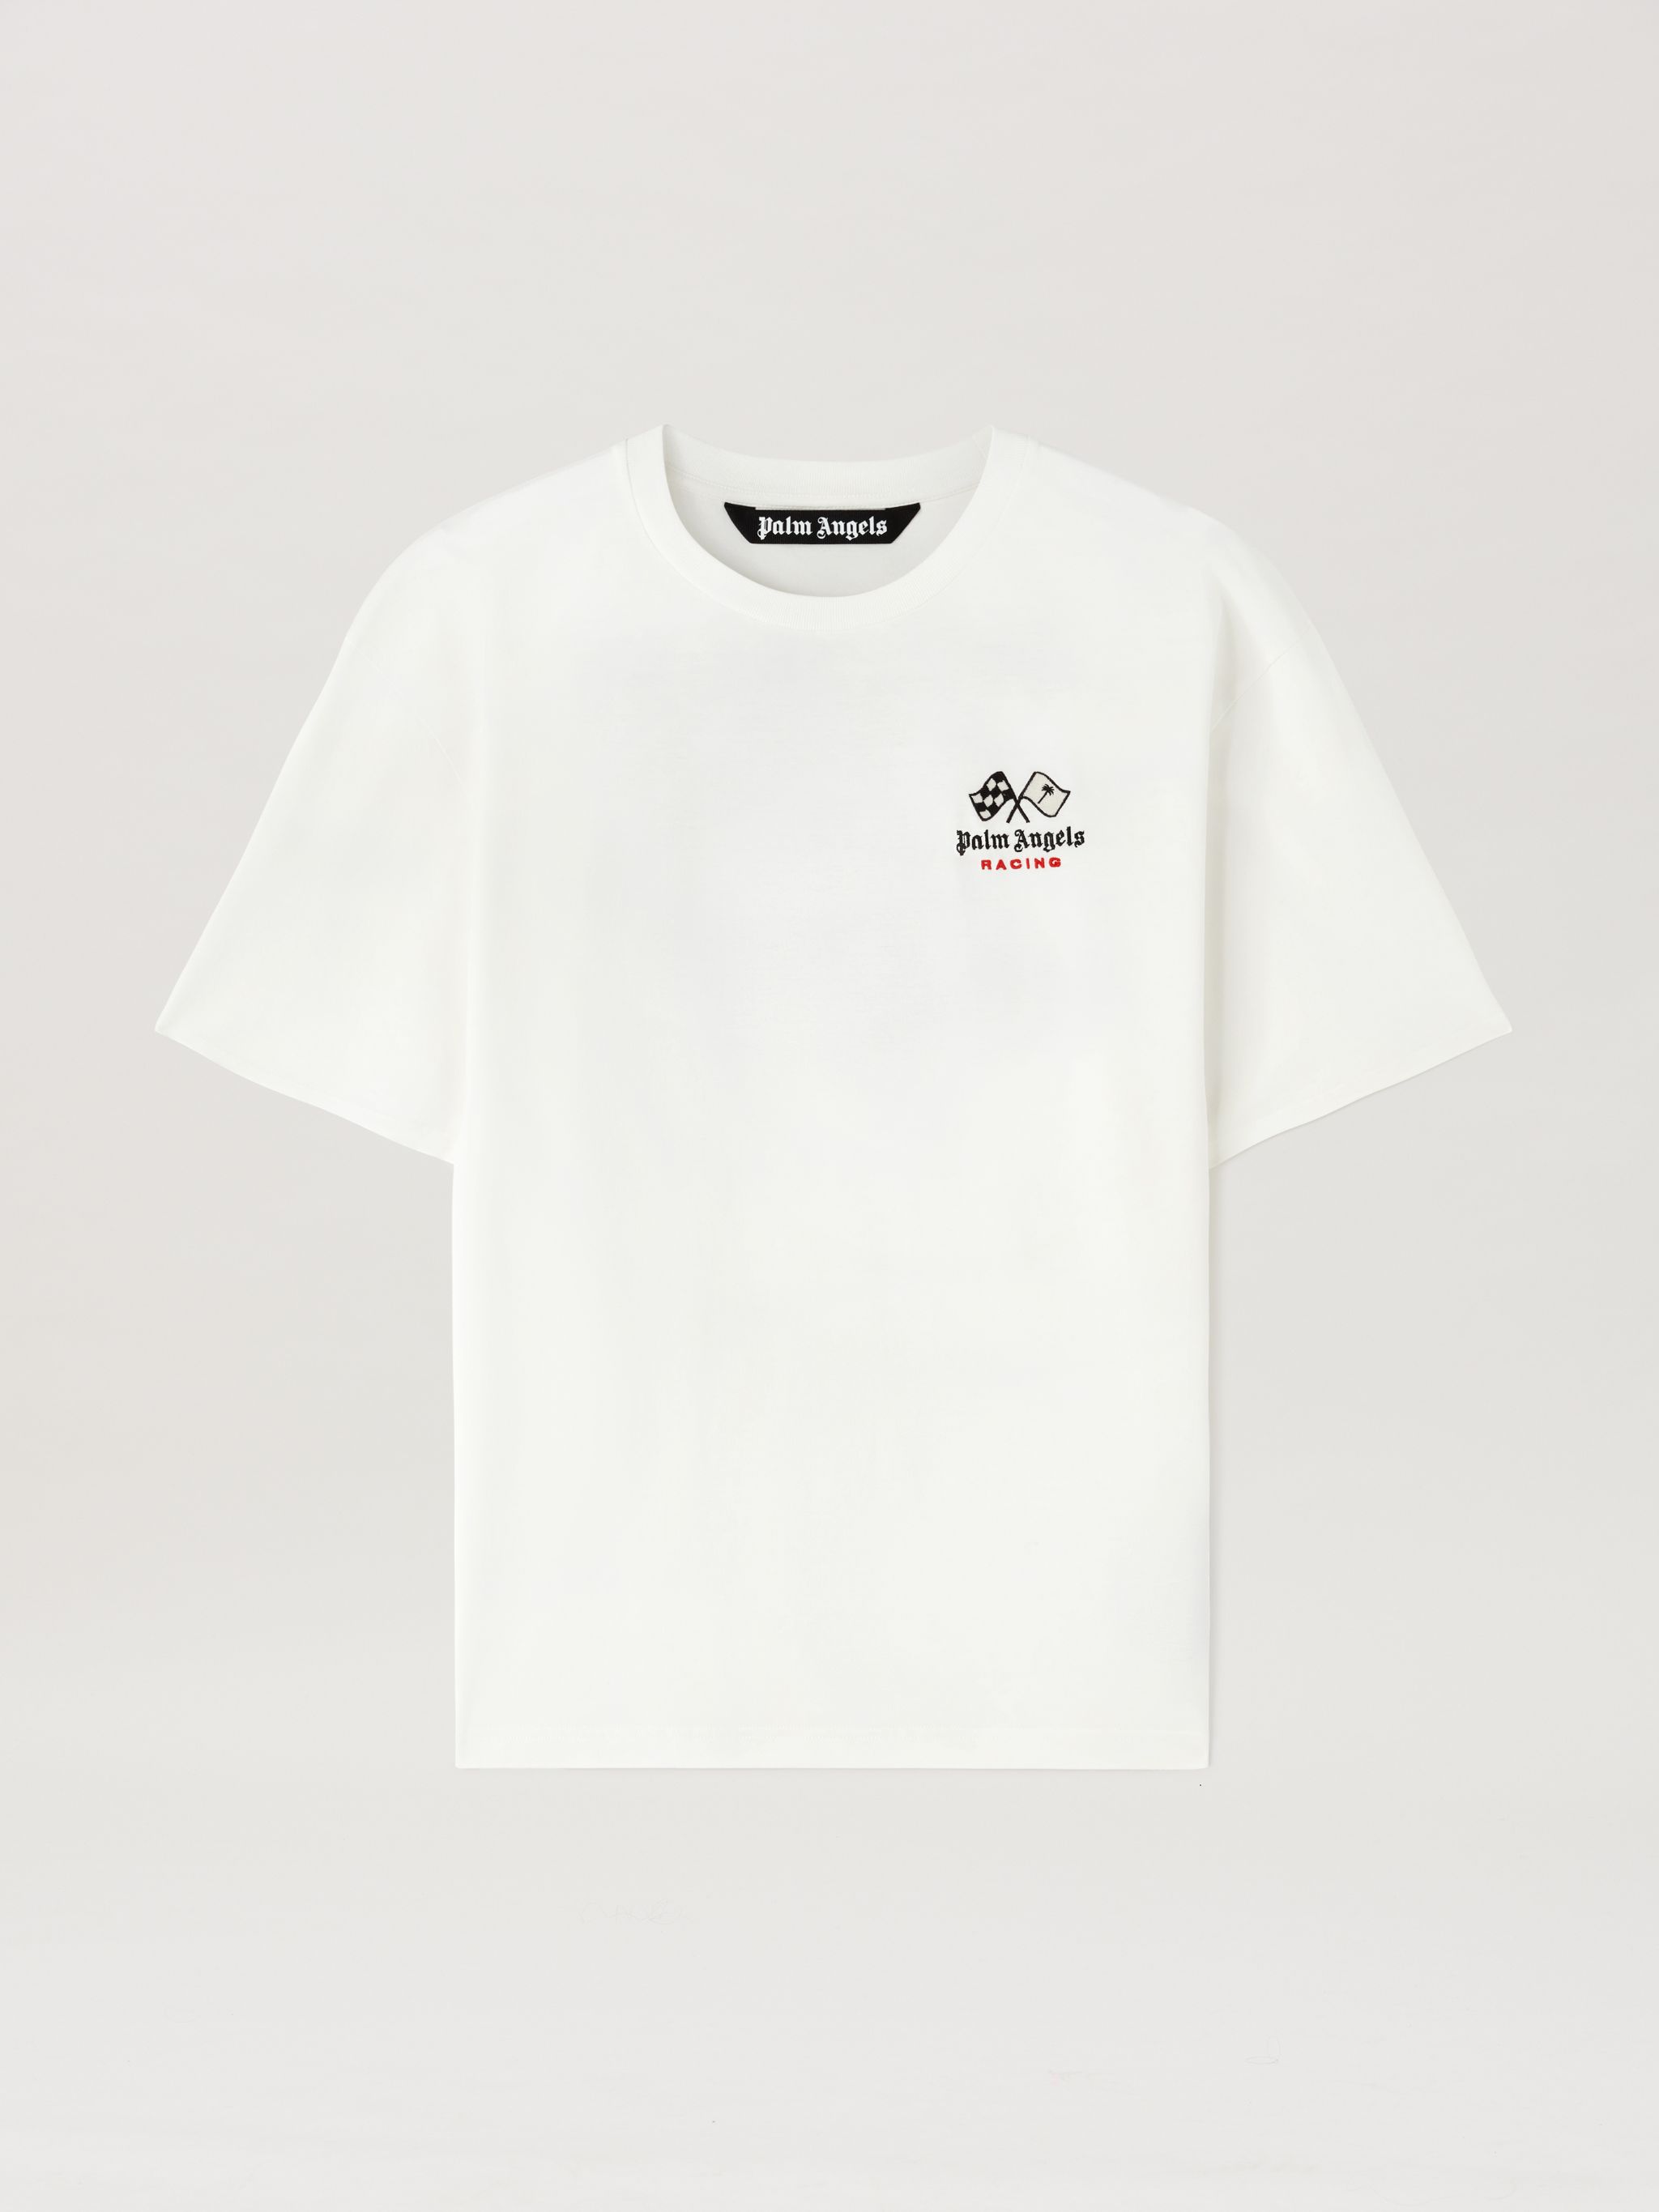 Men's T-Shirts  Palm Angels Official Website